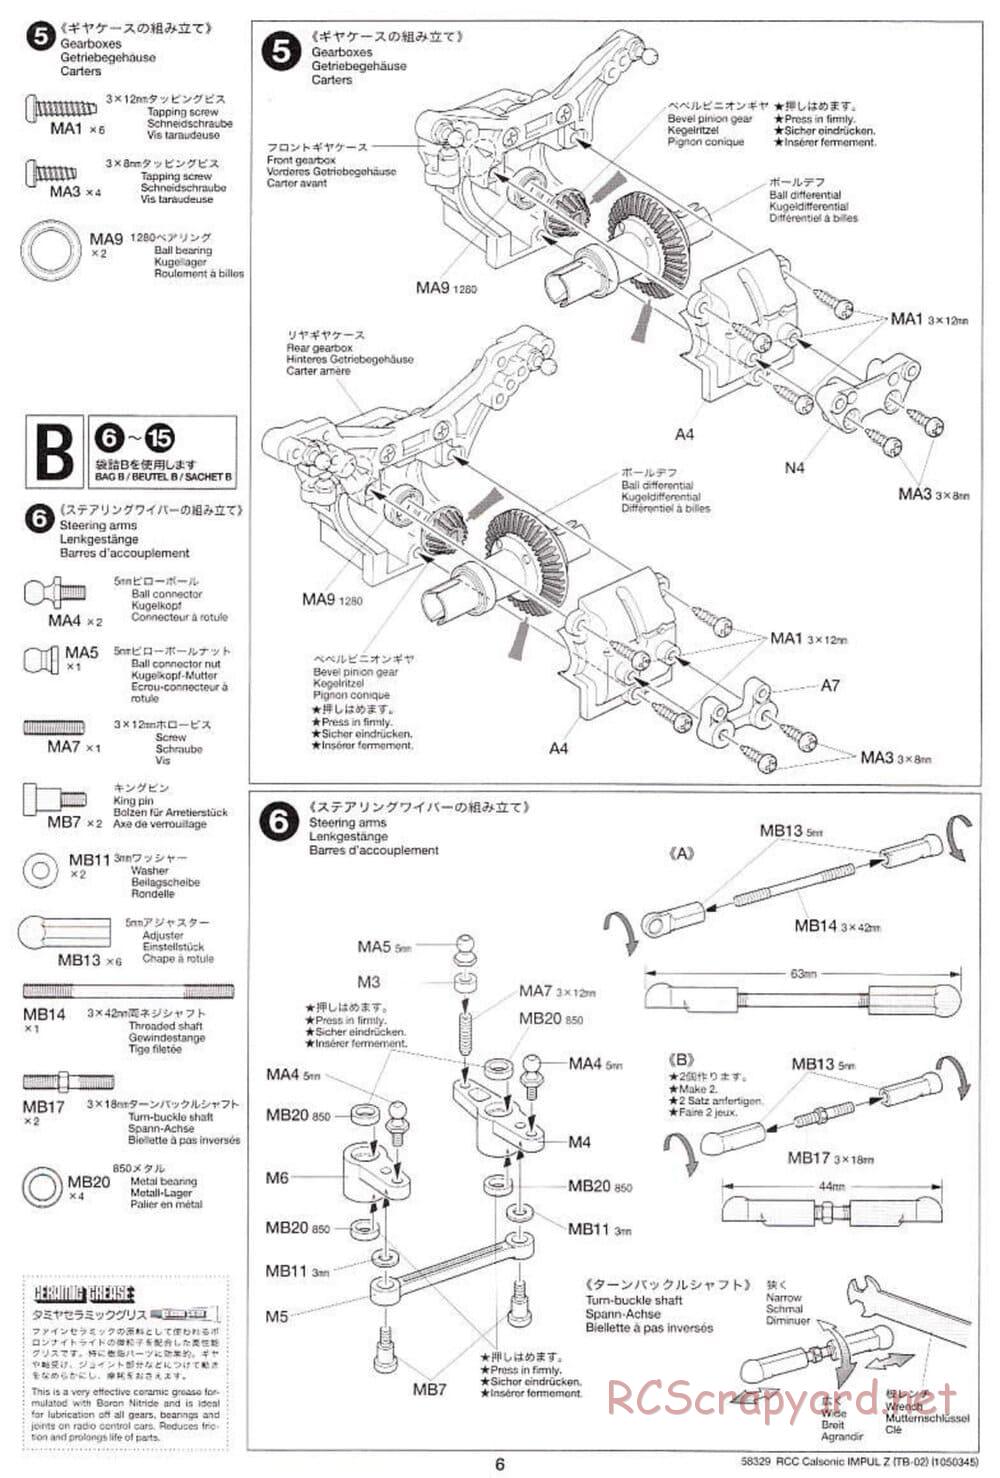 Tamiya - Calsonic Impul Z - TB-02 Chassis - Manual - Page 6